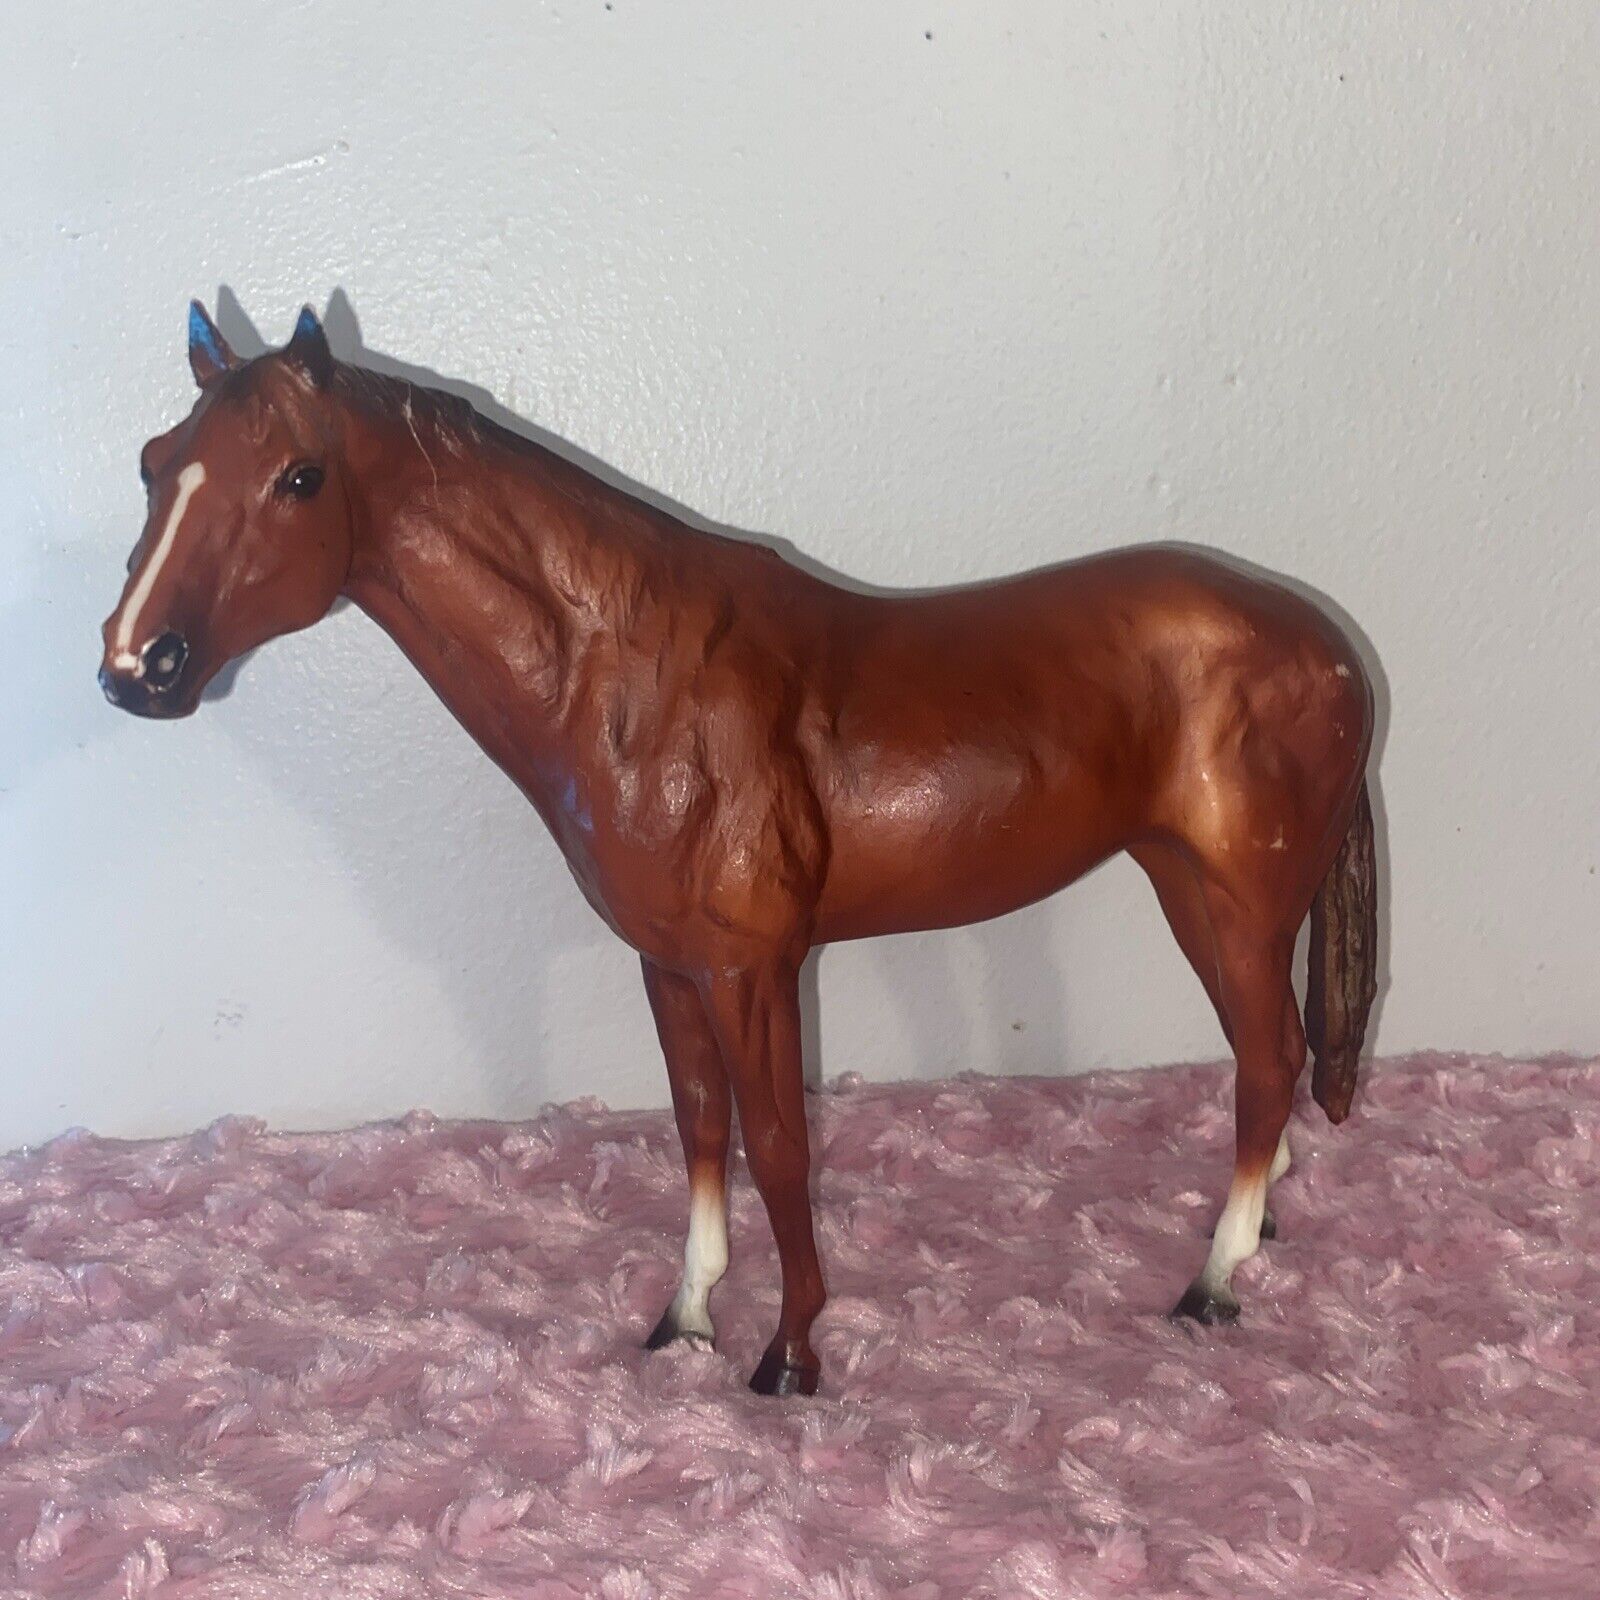 VTG Breyer Horse #435 Secretariat Famous Thoroughbred Racehorse Chestnut 1987-95